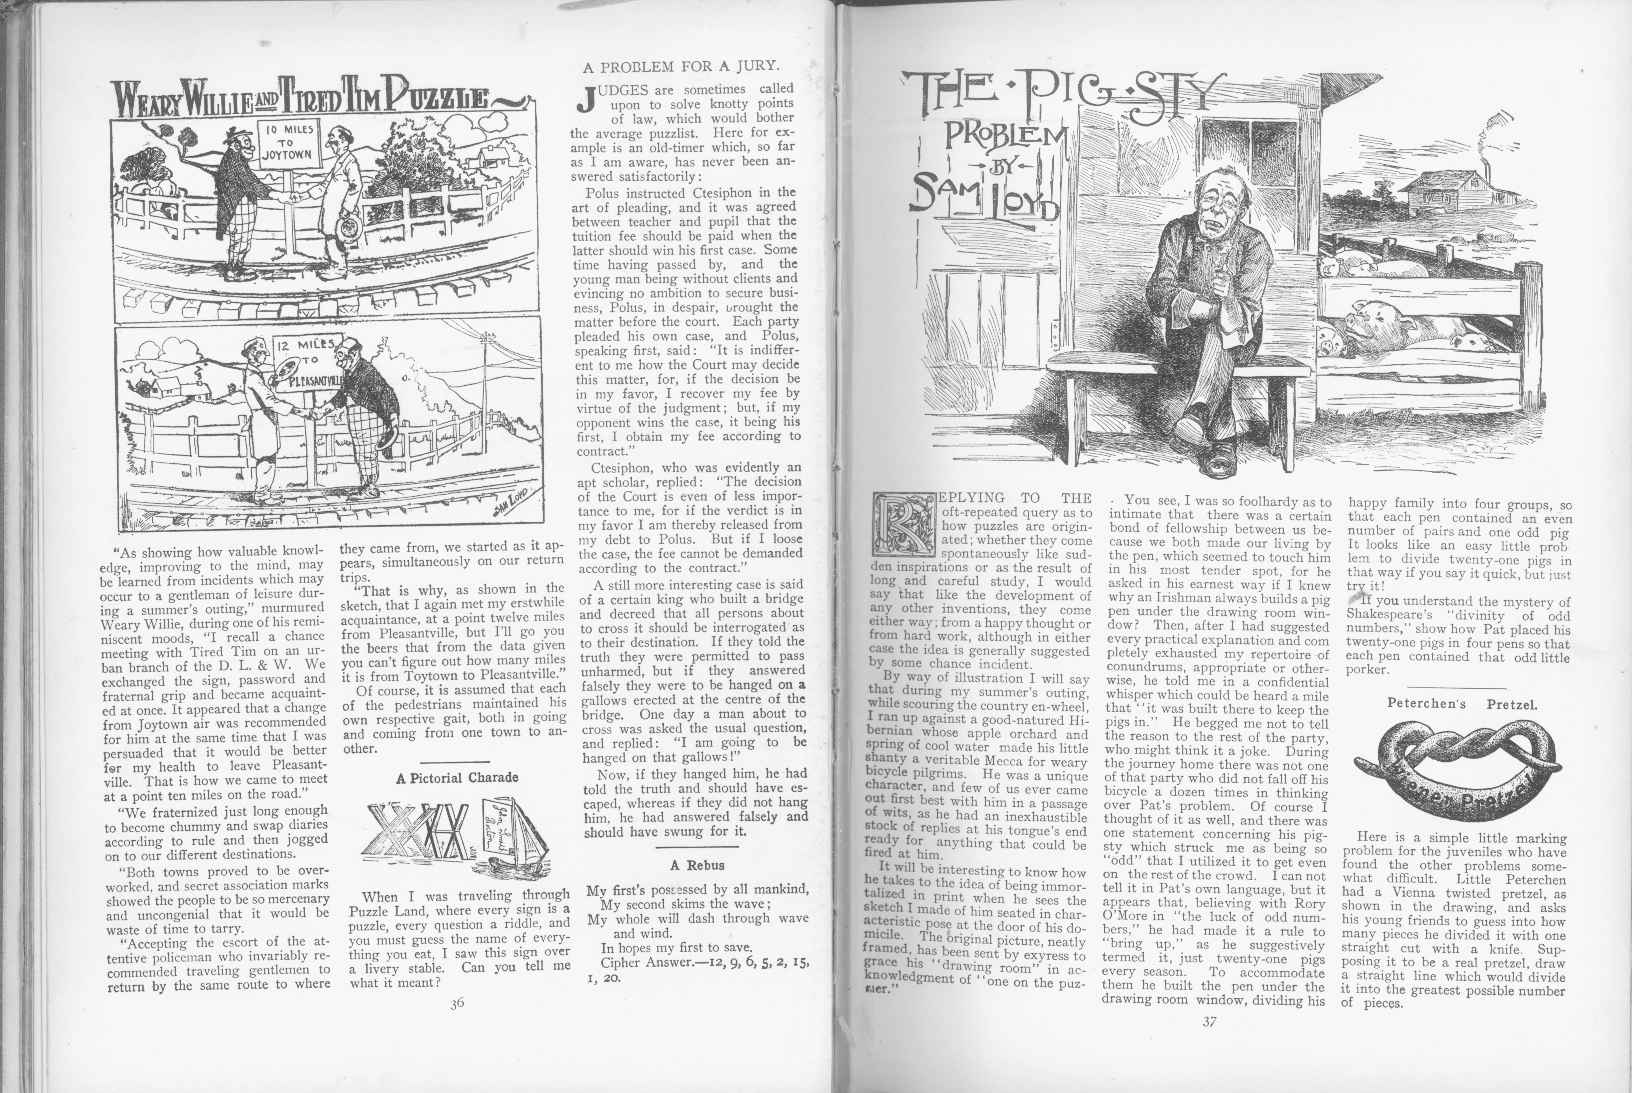 Sam Loyd - Cyclopedia of Puzzles - page 36-37